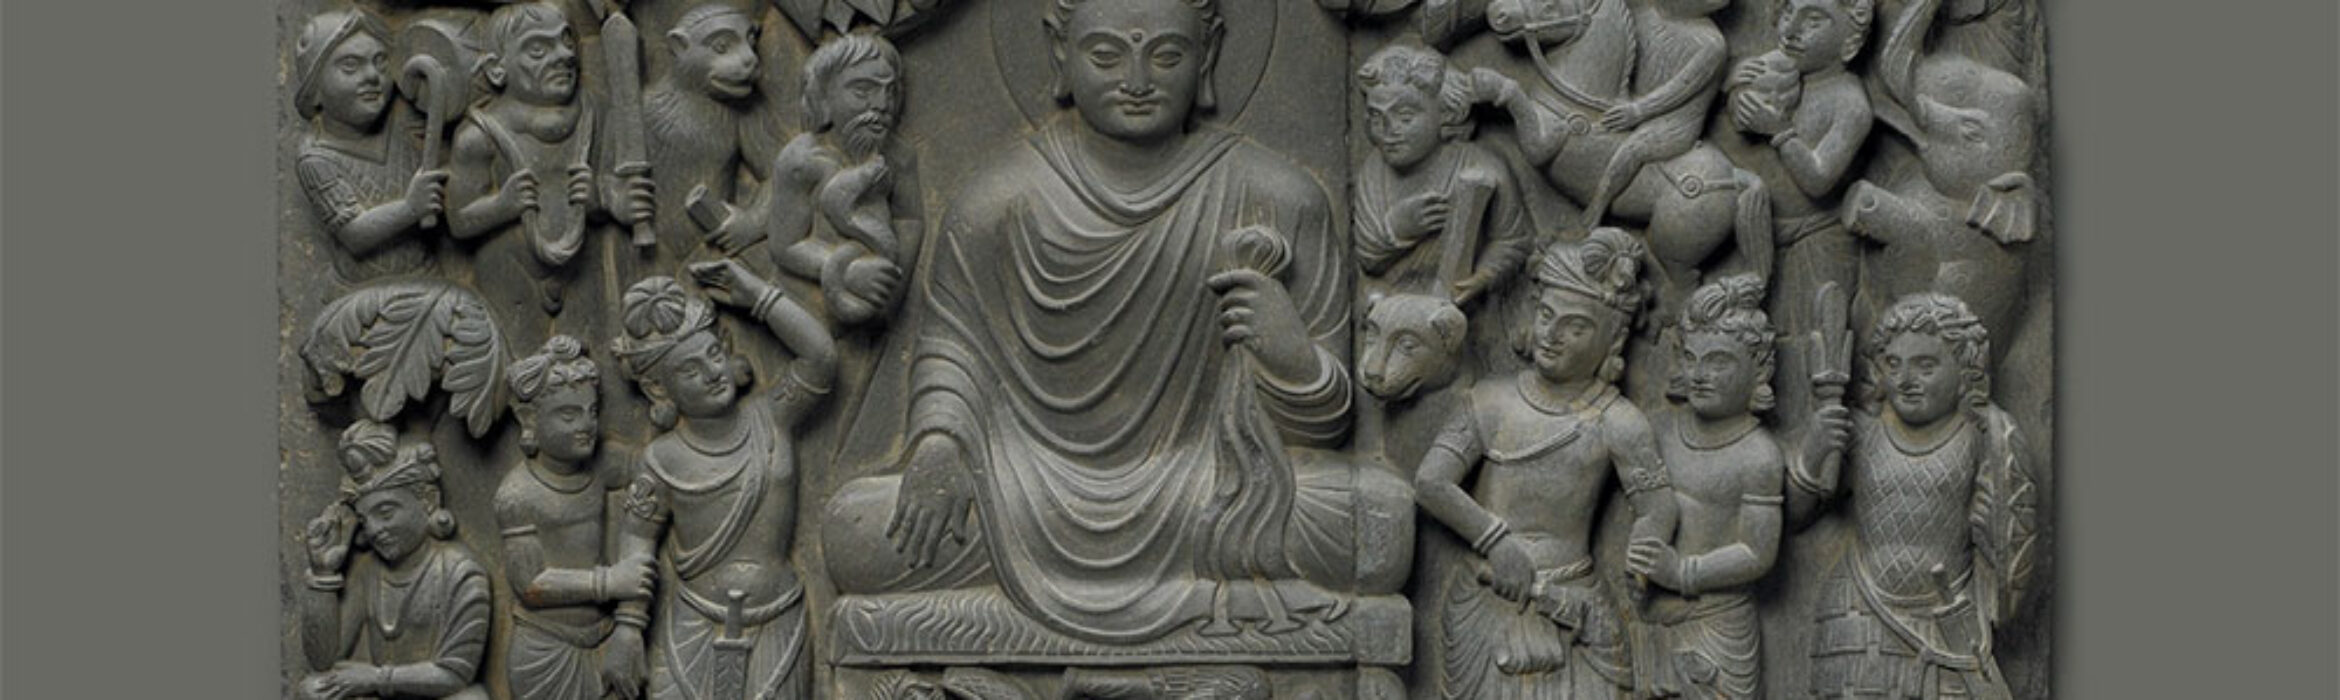 Lingyin Lecture Series in Buddhist Studies: Akliṣṭājñāna, vāsanā and perfect Buddhahood